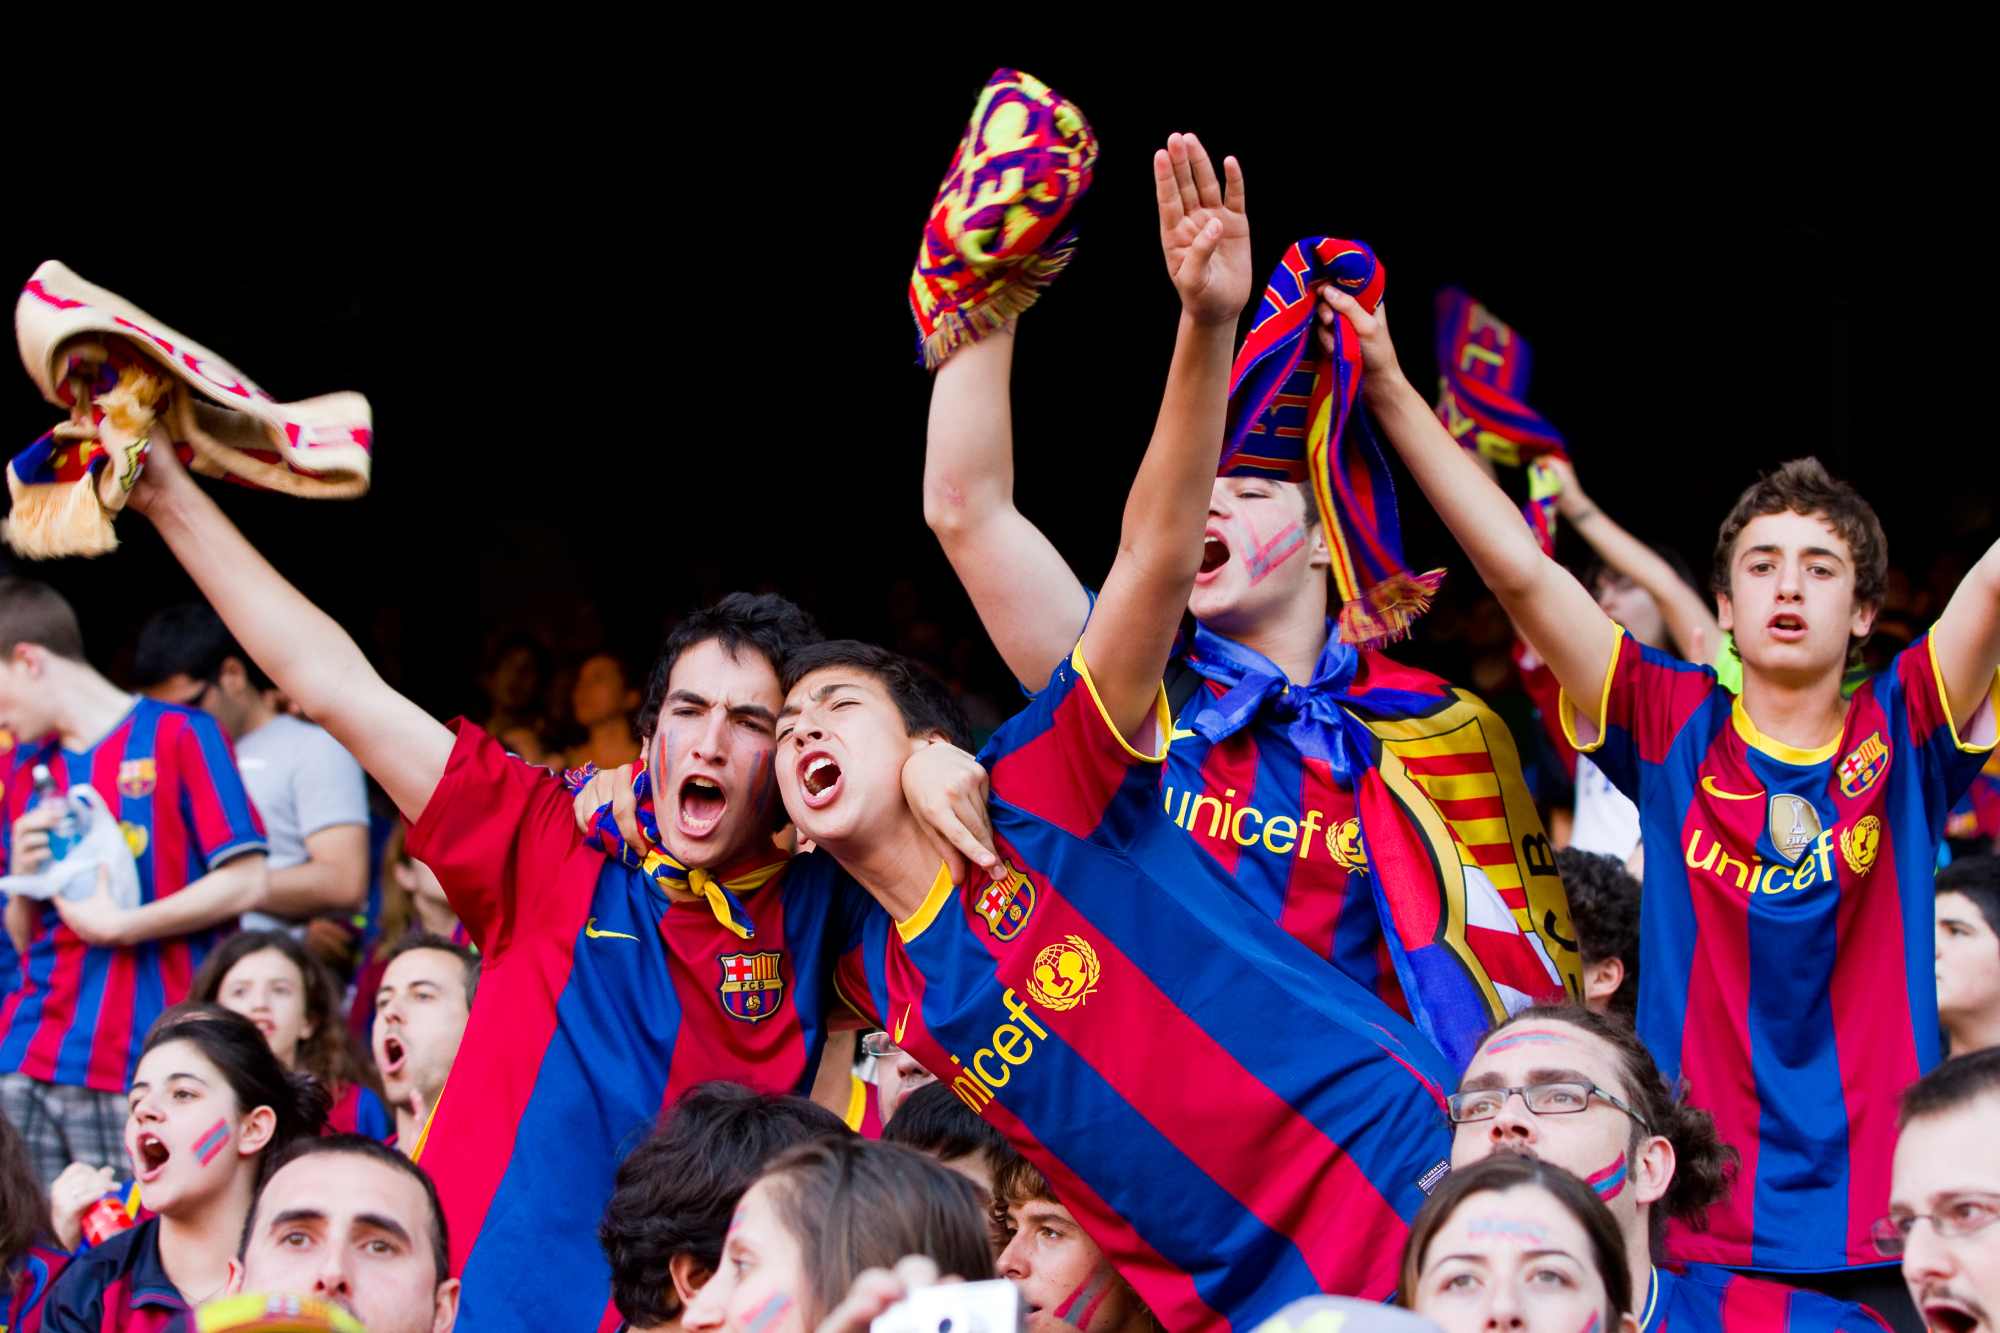 Barcelona football fans wearing Barca merch